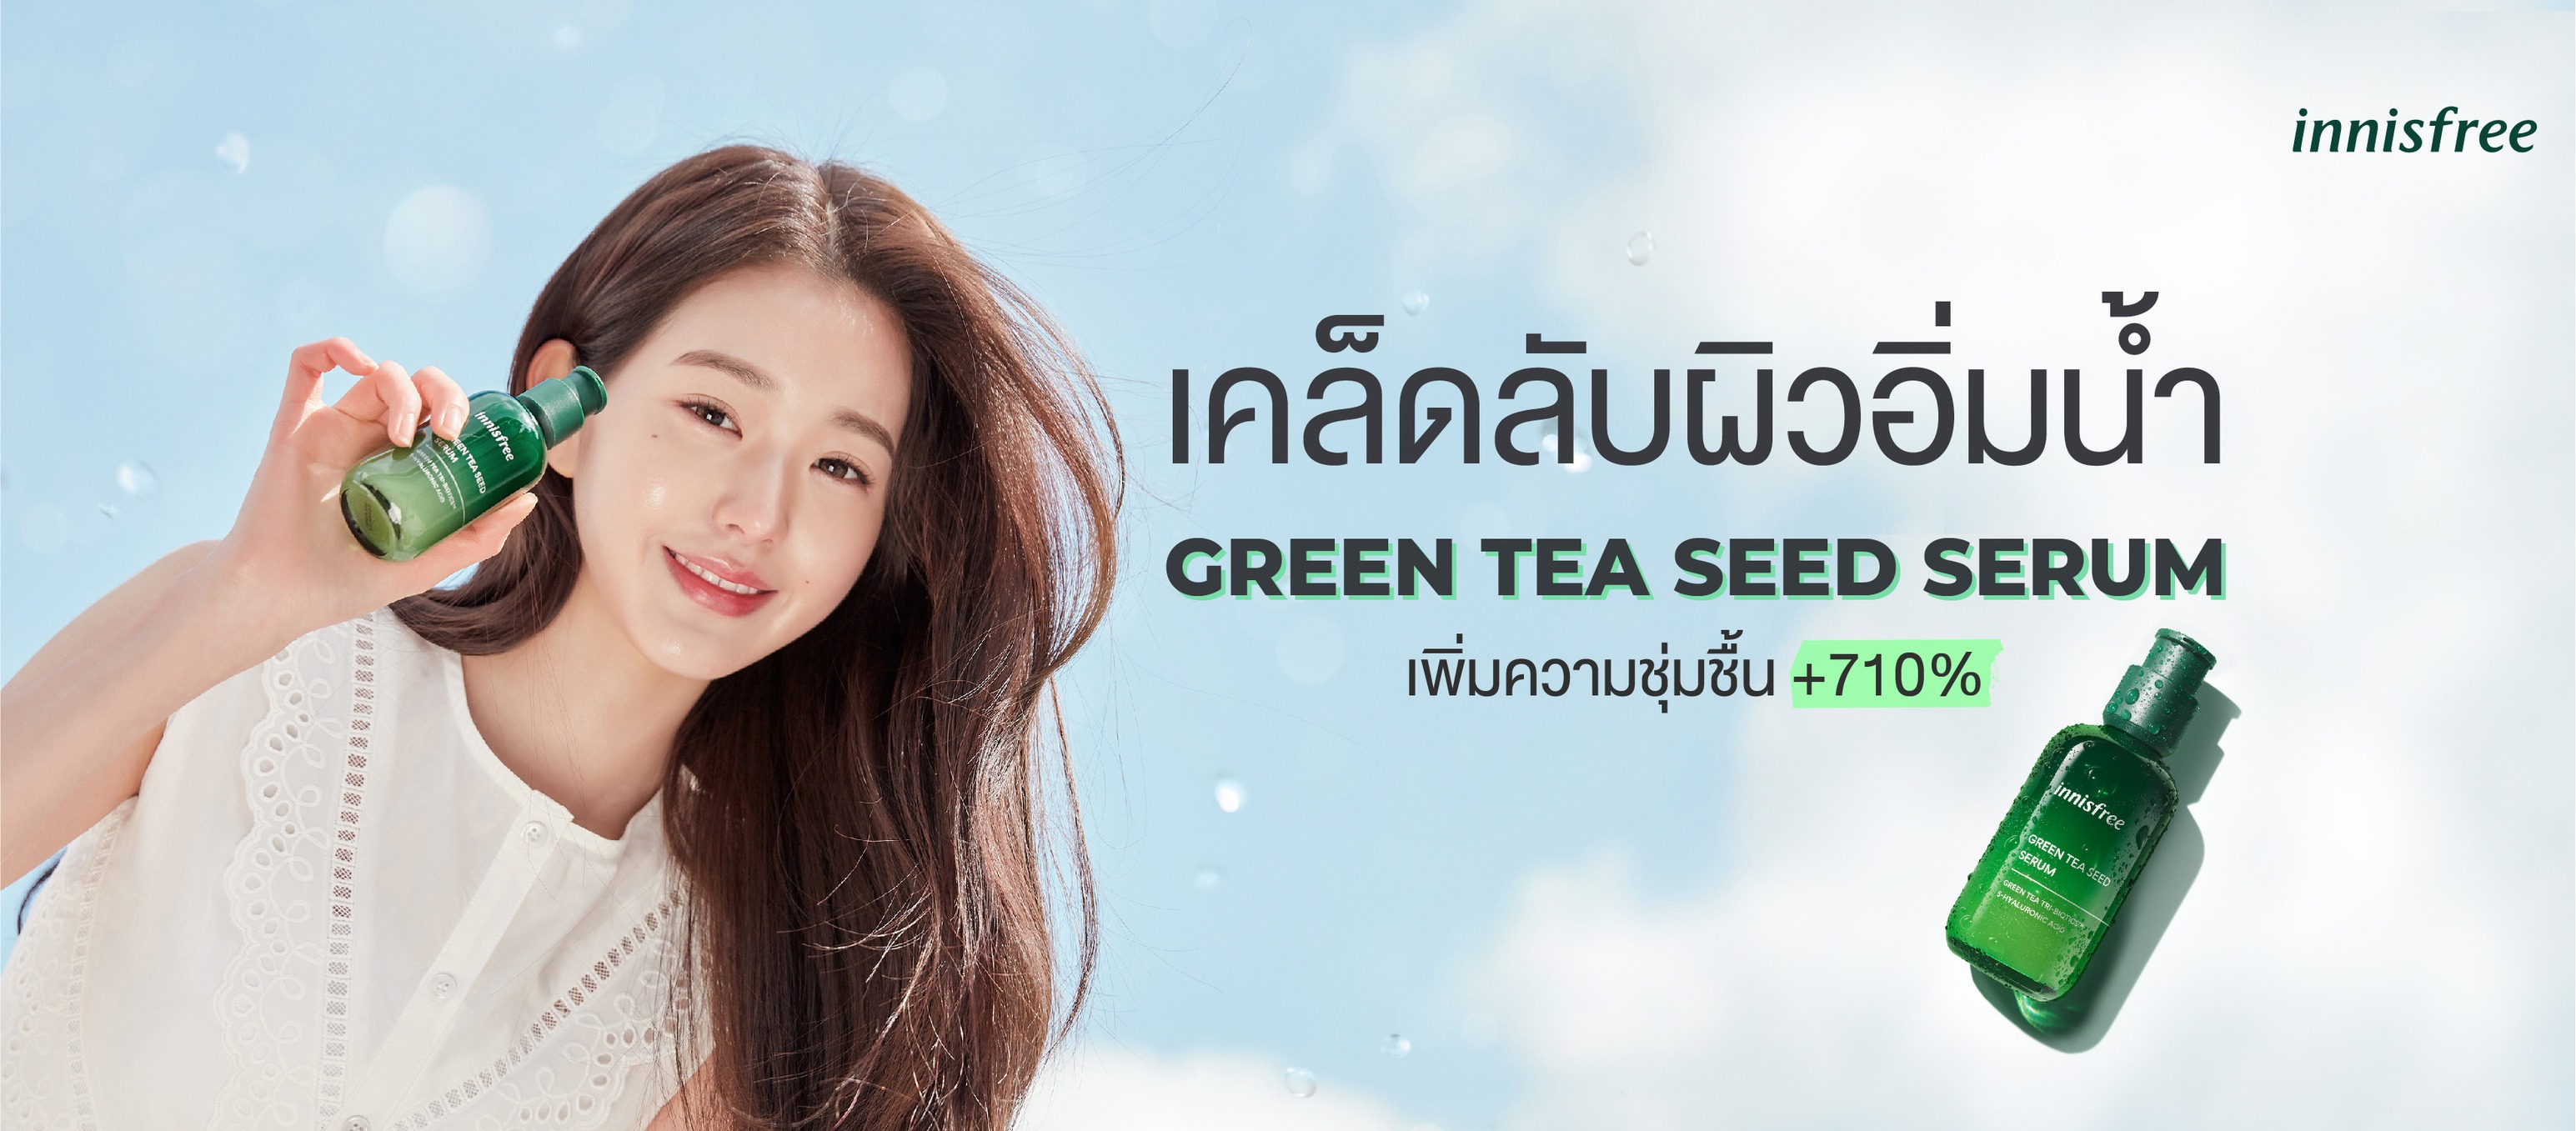 innisfree Green Tea Eeed Serum Green Tea Tri-Biotics 5-Hyaluronic Acid 